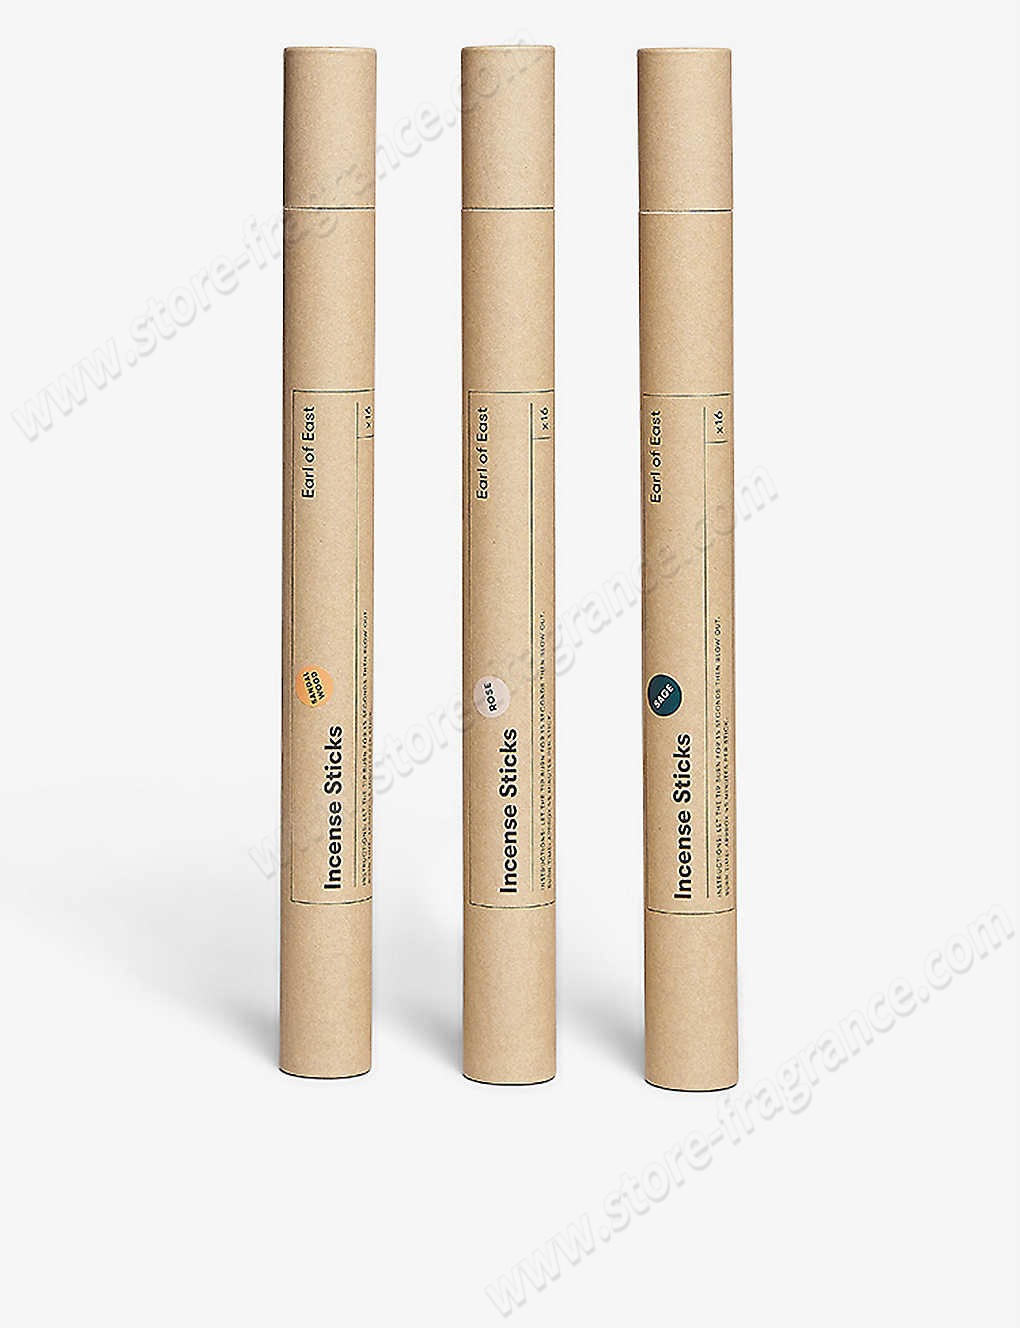 EARL OF EAST/Sandalwood incense sticks pack of 16 Limit Offer - EARL OF EAST/Sandalwood incense sticks pack of 16 Limit Offer